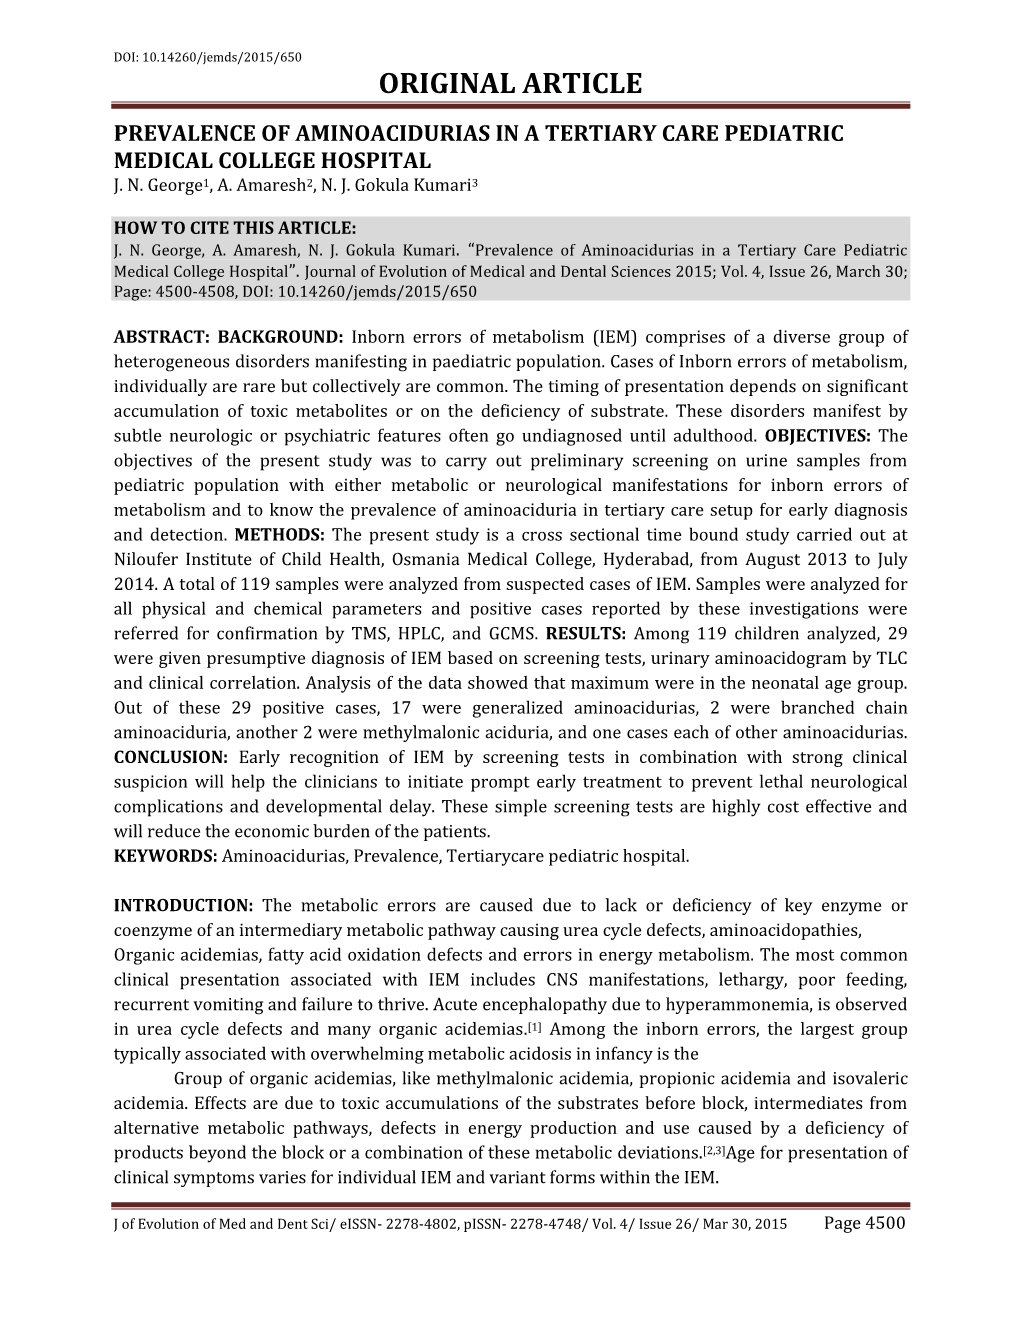 Original Article Prevalence of Aminoacidurias in a Tertiary Care Pediatric Medical College Hospital J